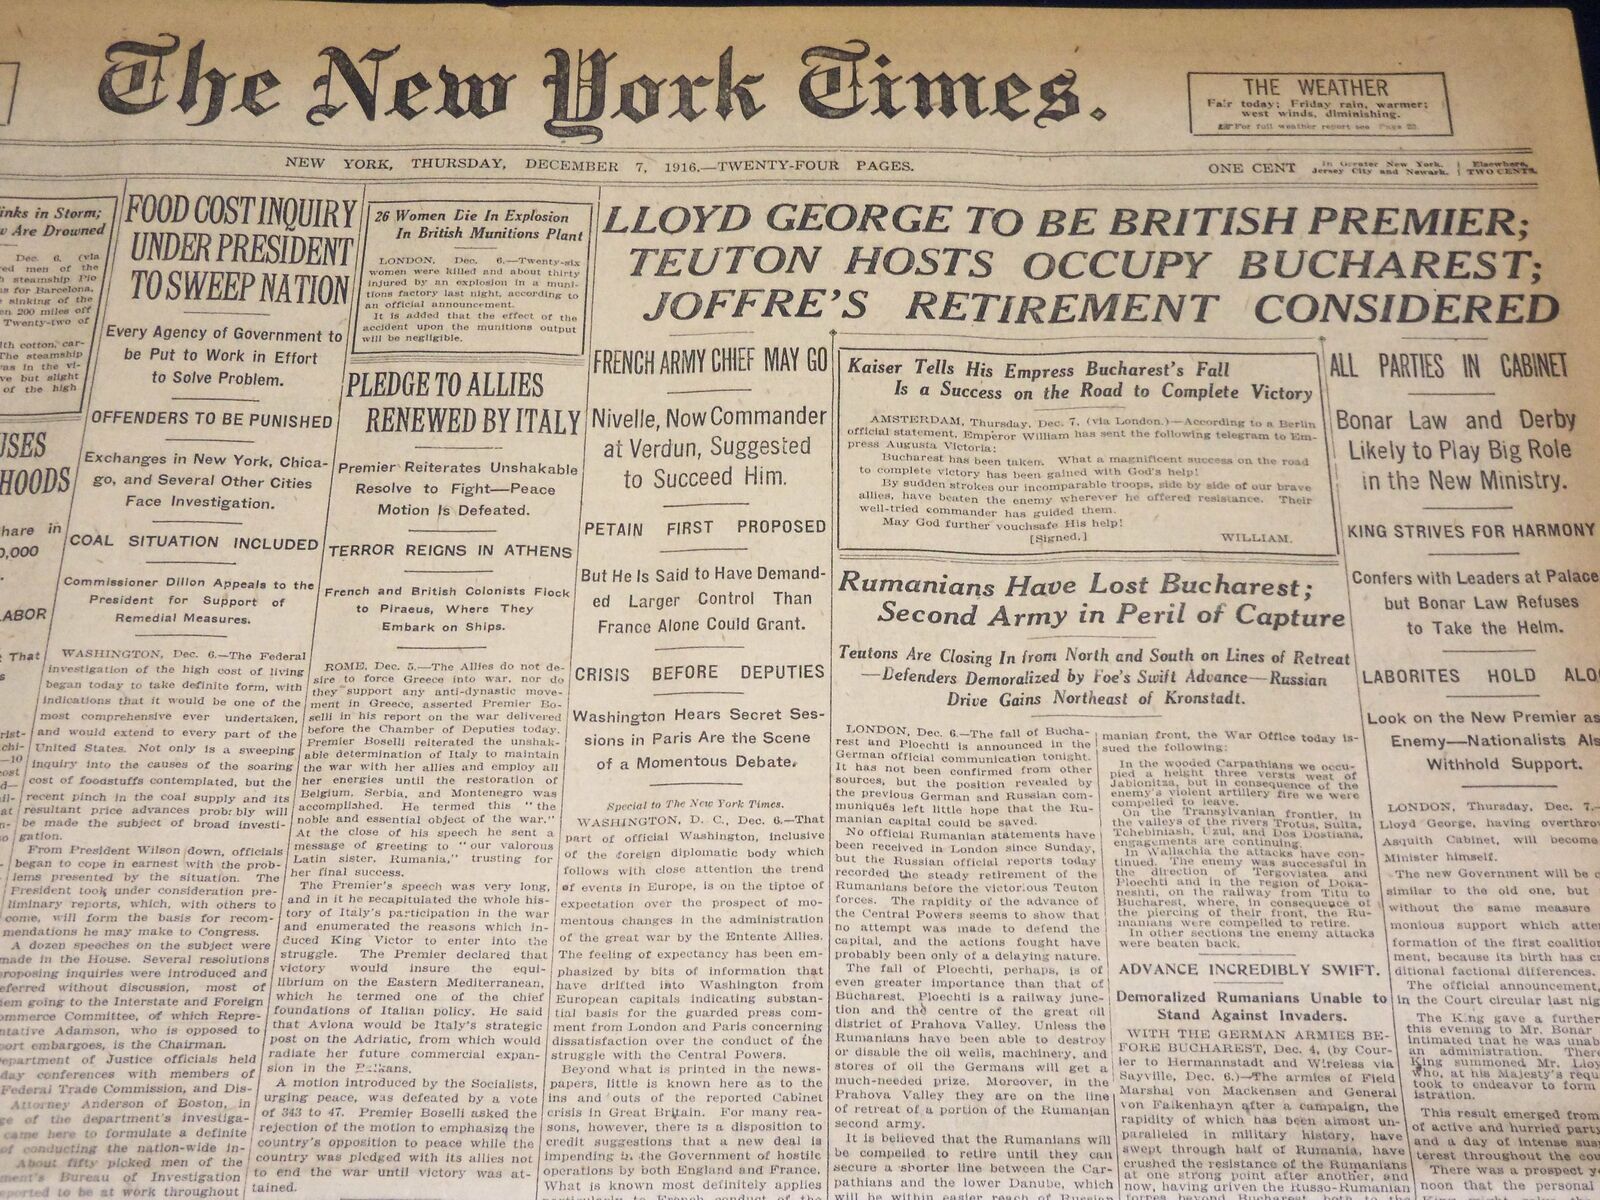 1916 DECEMBER 7 NEW YORK TIMES - LLOYD GEORGE TO BE BRITISH PREMIER - NT 8629